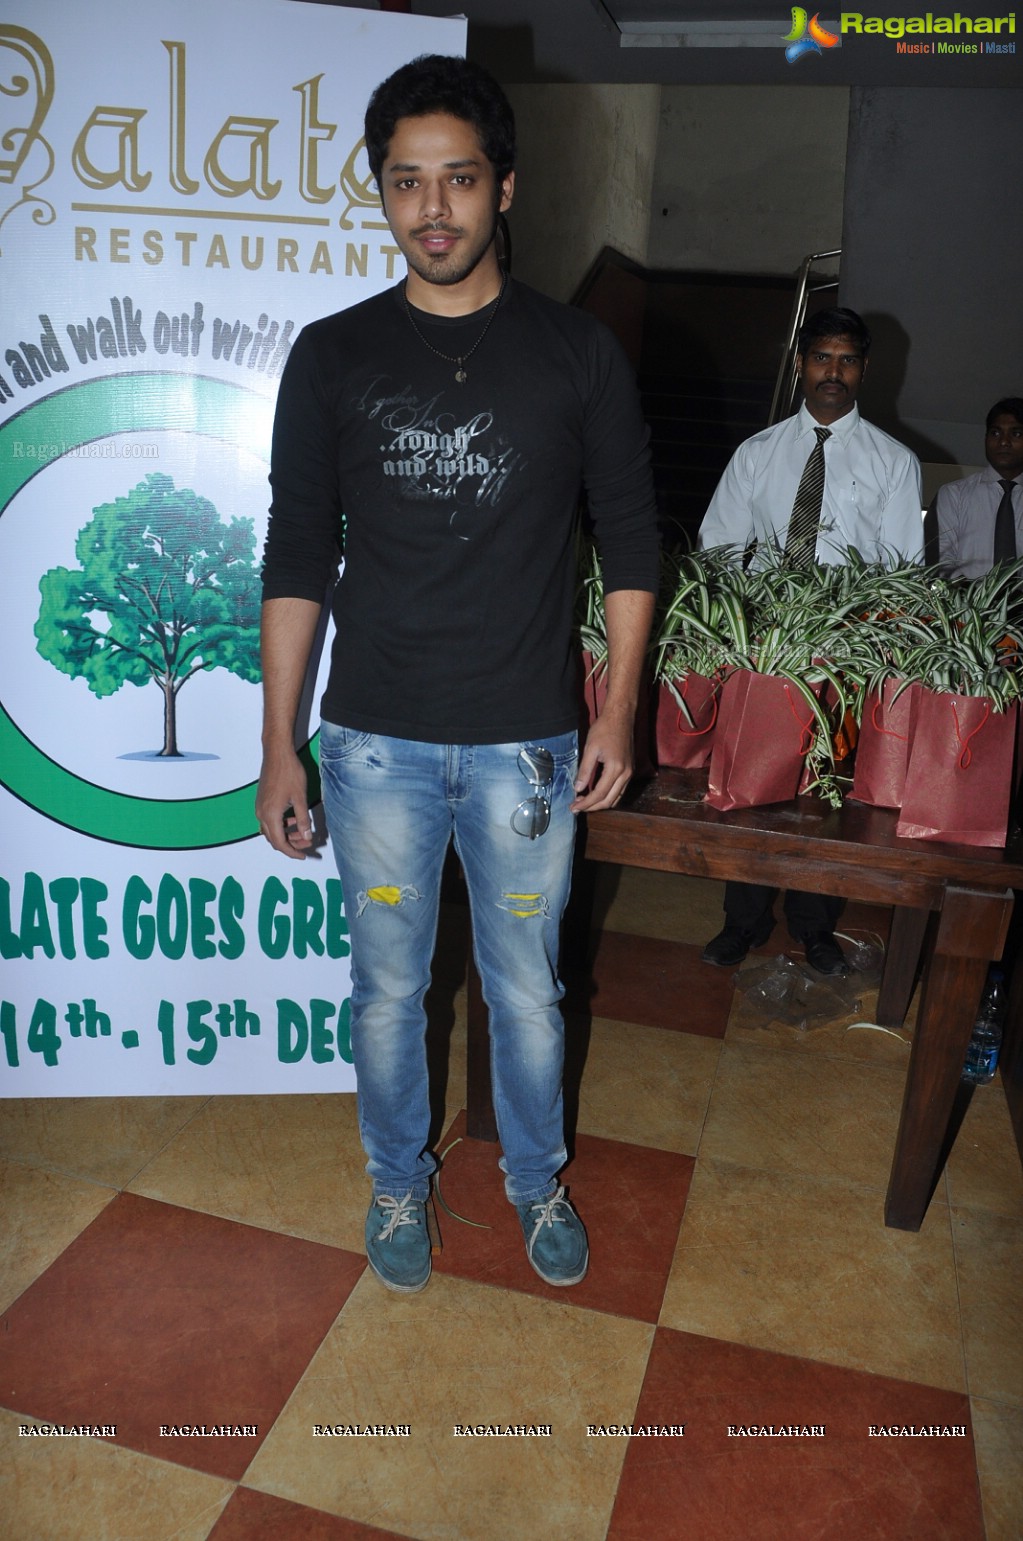 SJ Palate goes Green, Hyderabad